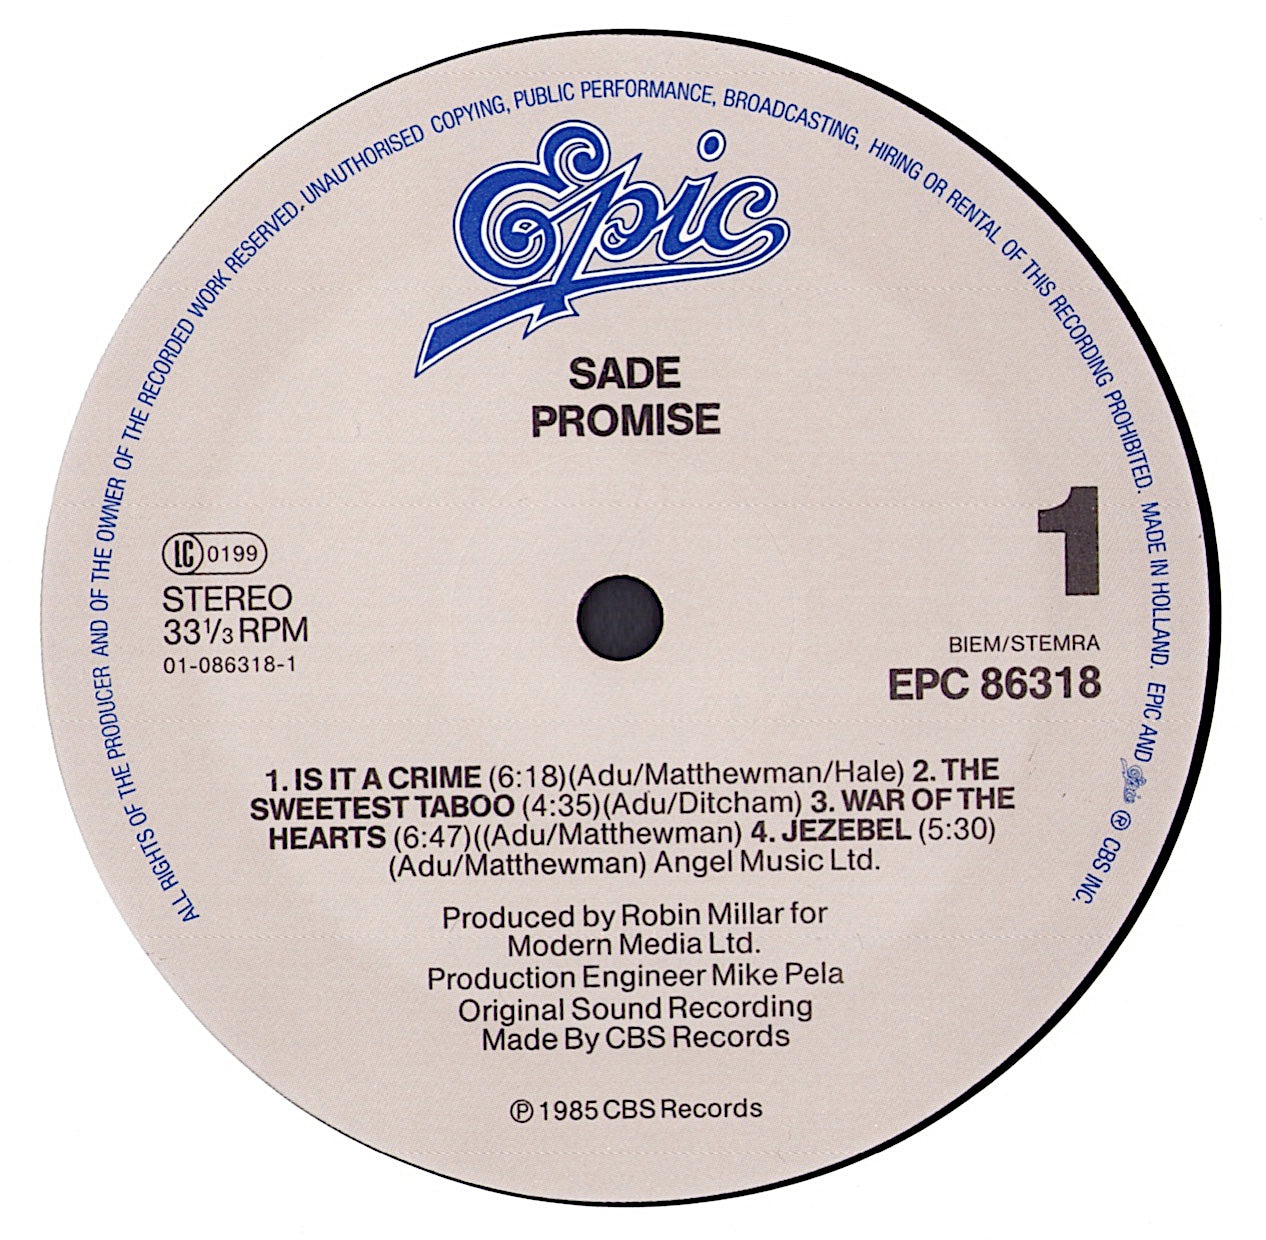 Sade - Promise Vinyl LP Club-Edition